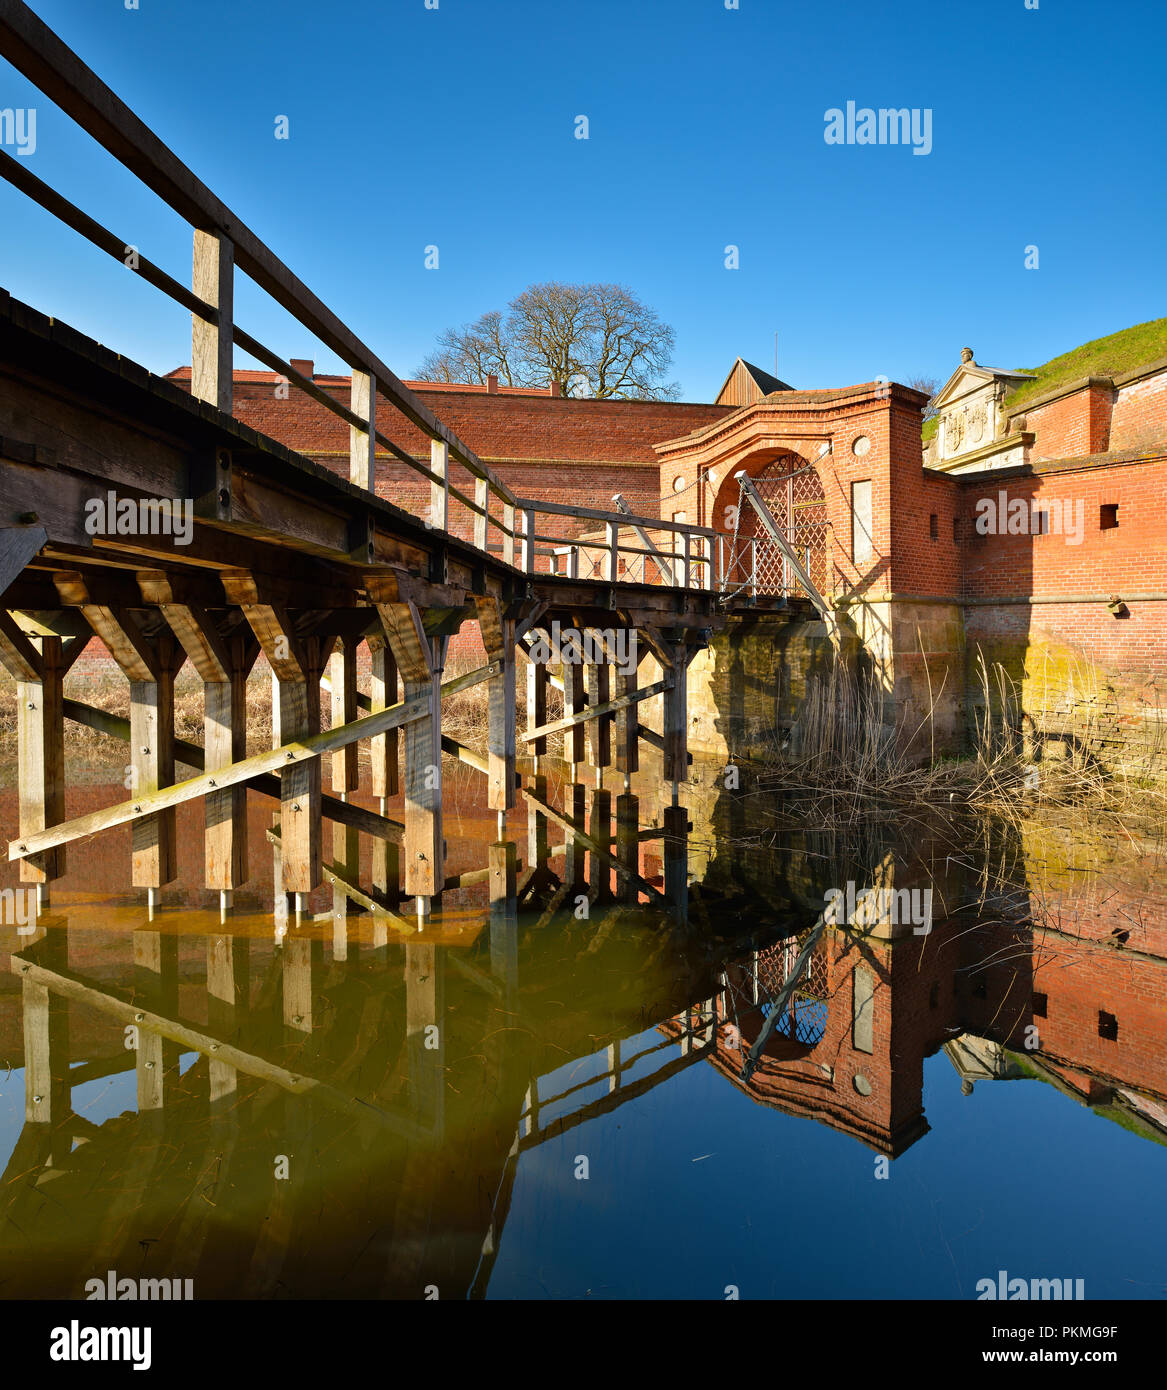 Fortress Dömitz, gate with drawbridge over moat, Dömitz, Mecklenburg-Western Pomerania, Germany Stock Photo